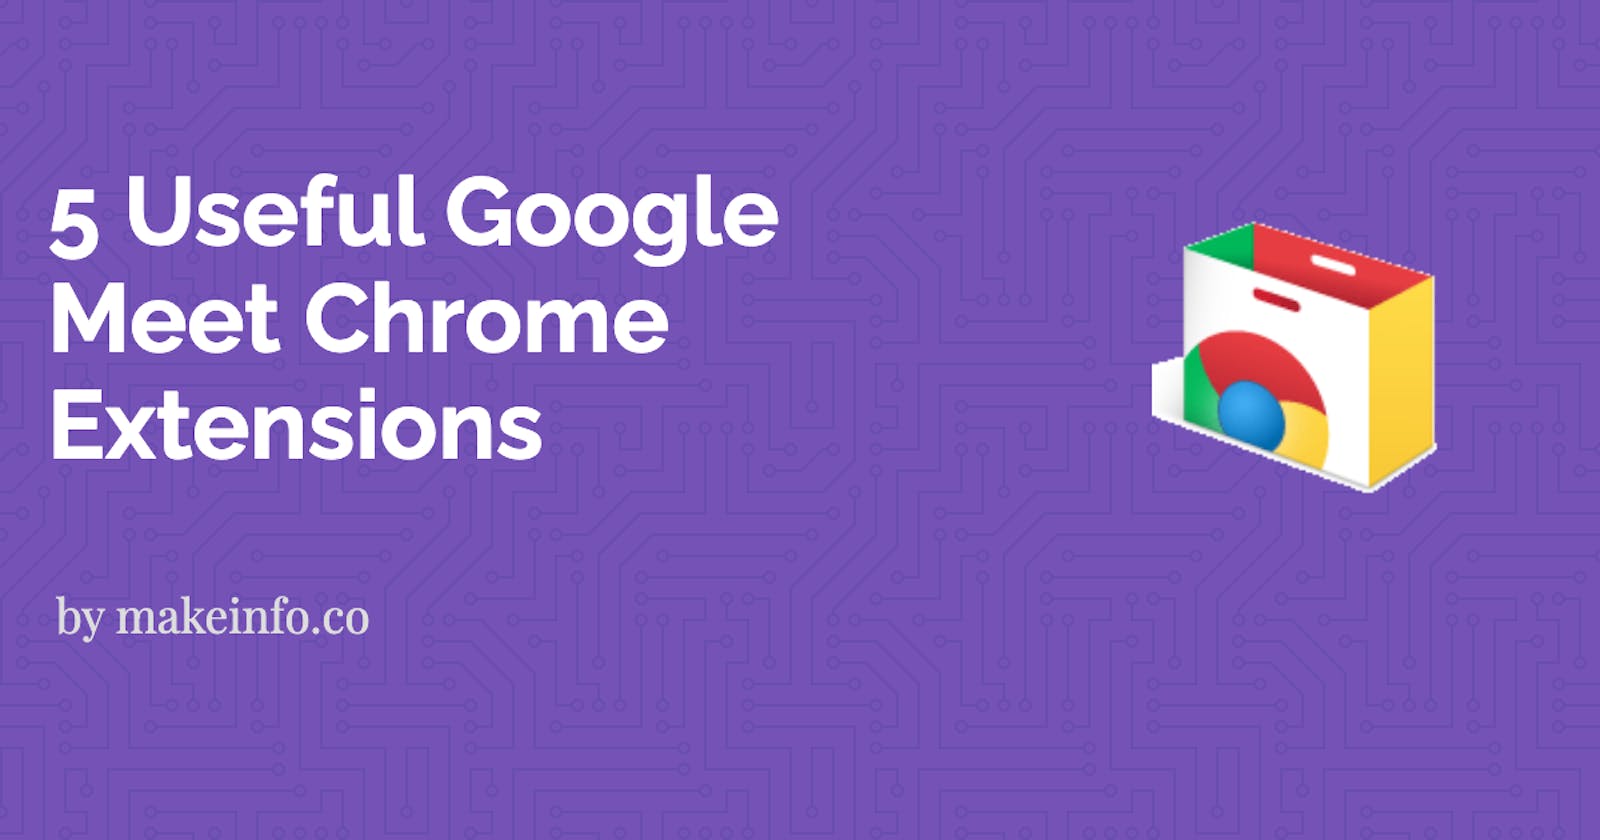 5 Useful Chrome Extensions to make Google Meet better